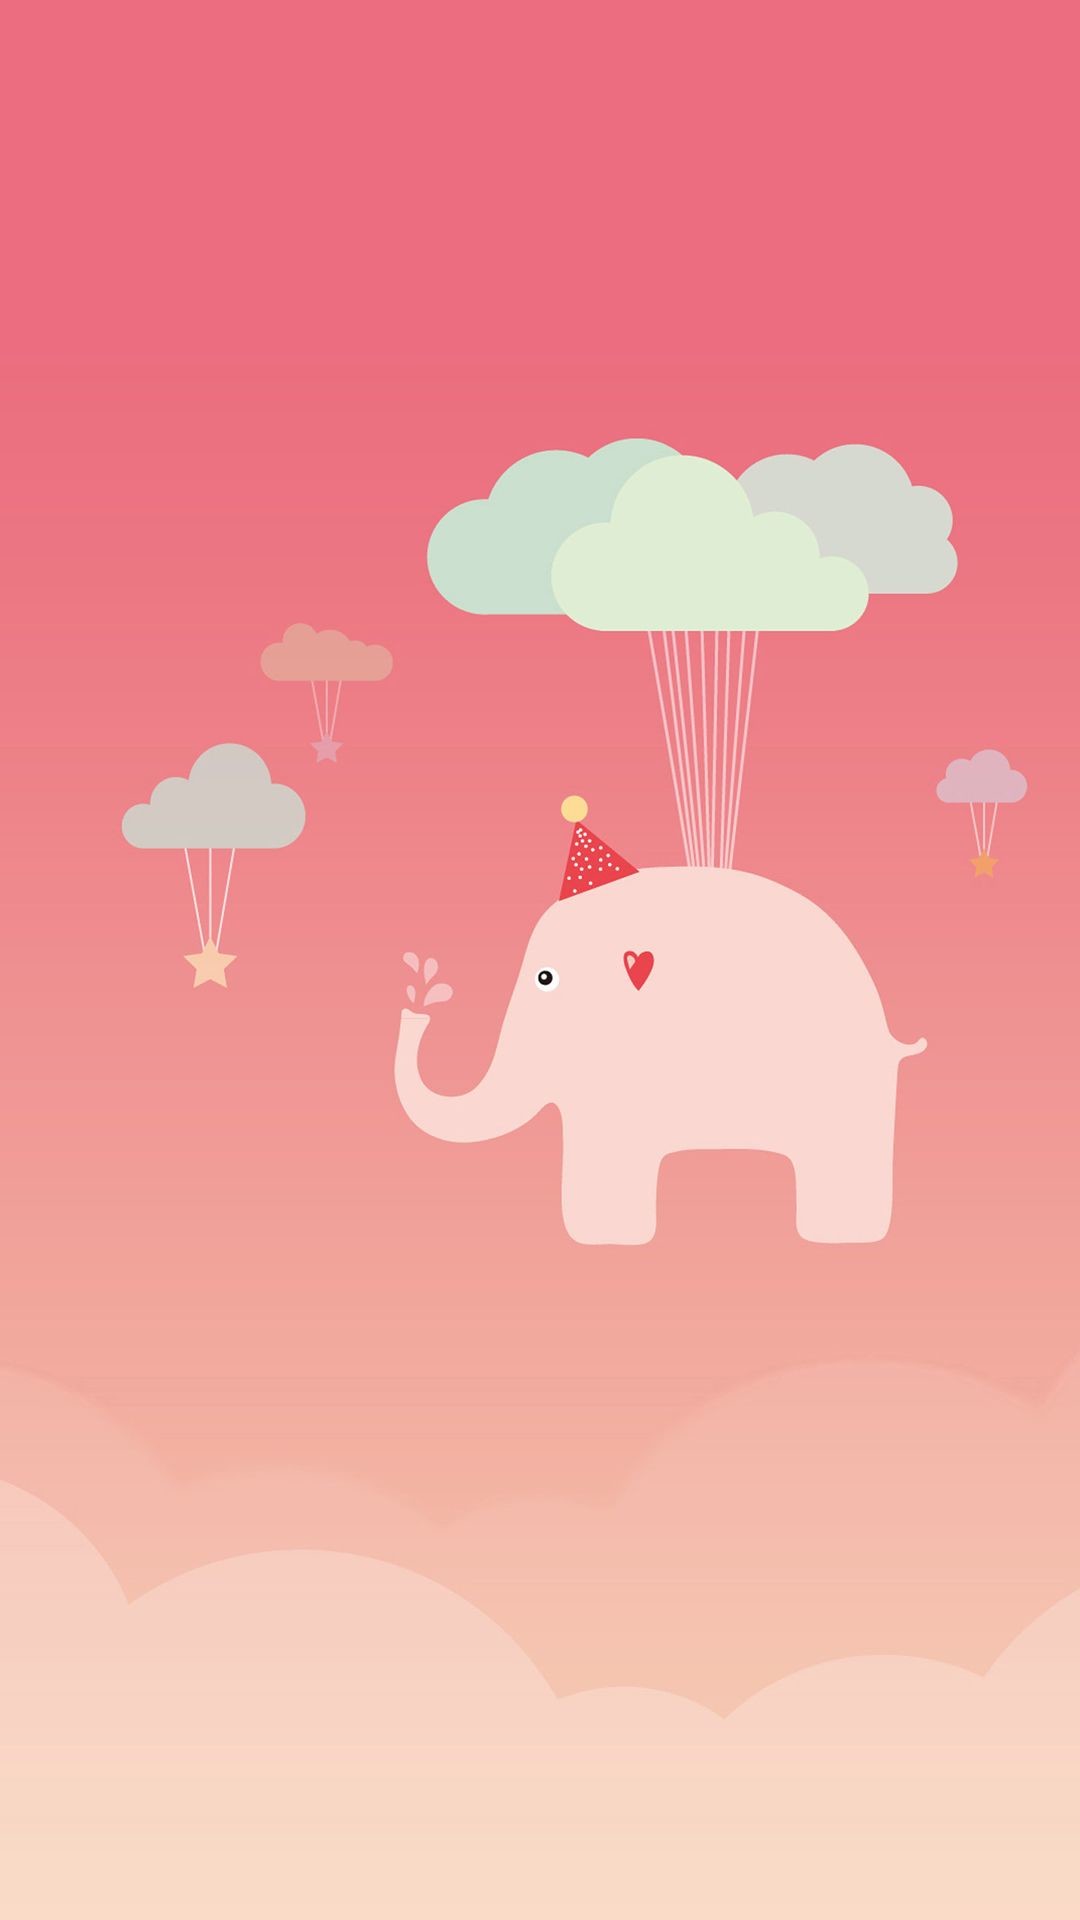 Cute Elephant iPhone 6 Wallpaper Download